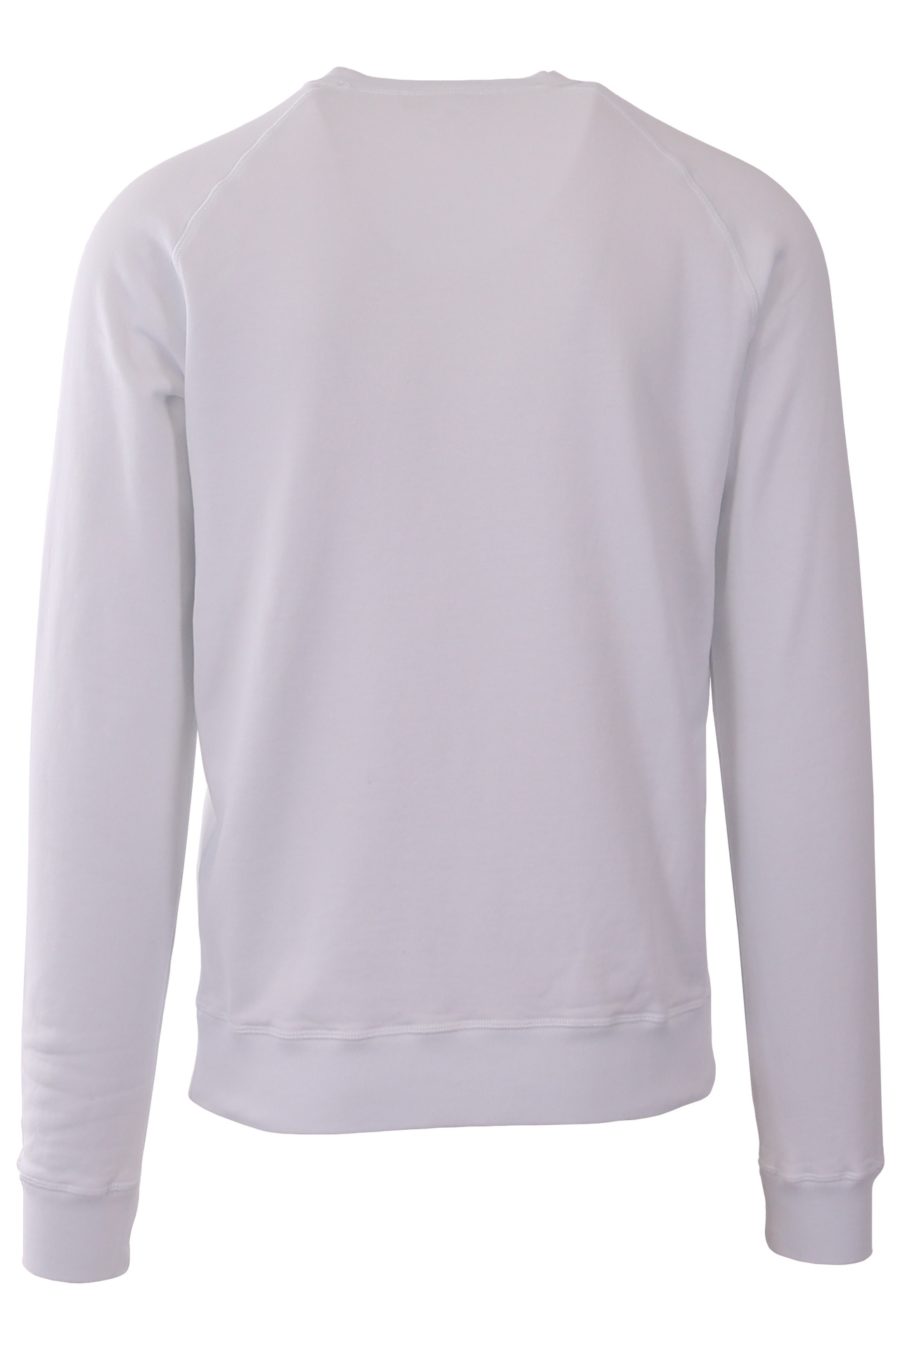 Sweatshirt Dsquared2 white with black logo - 1f63644b342645e9644dcf29c6506cd1a220c0cf